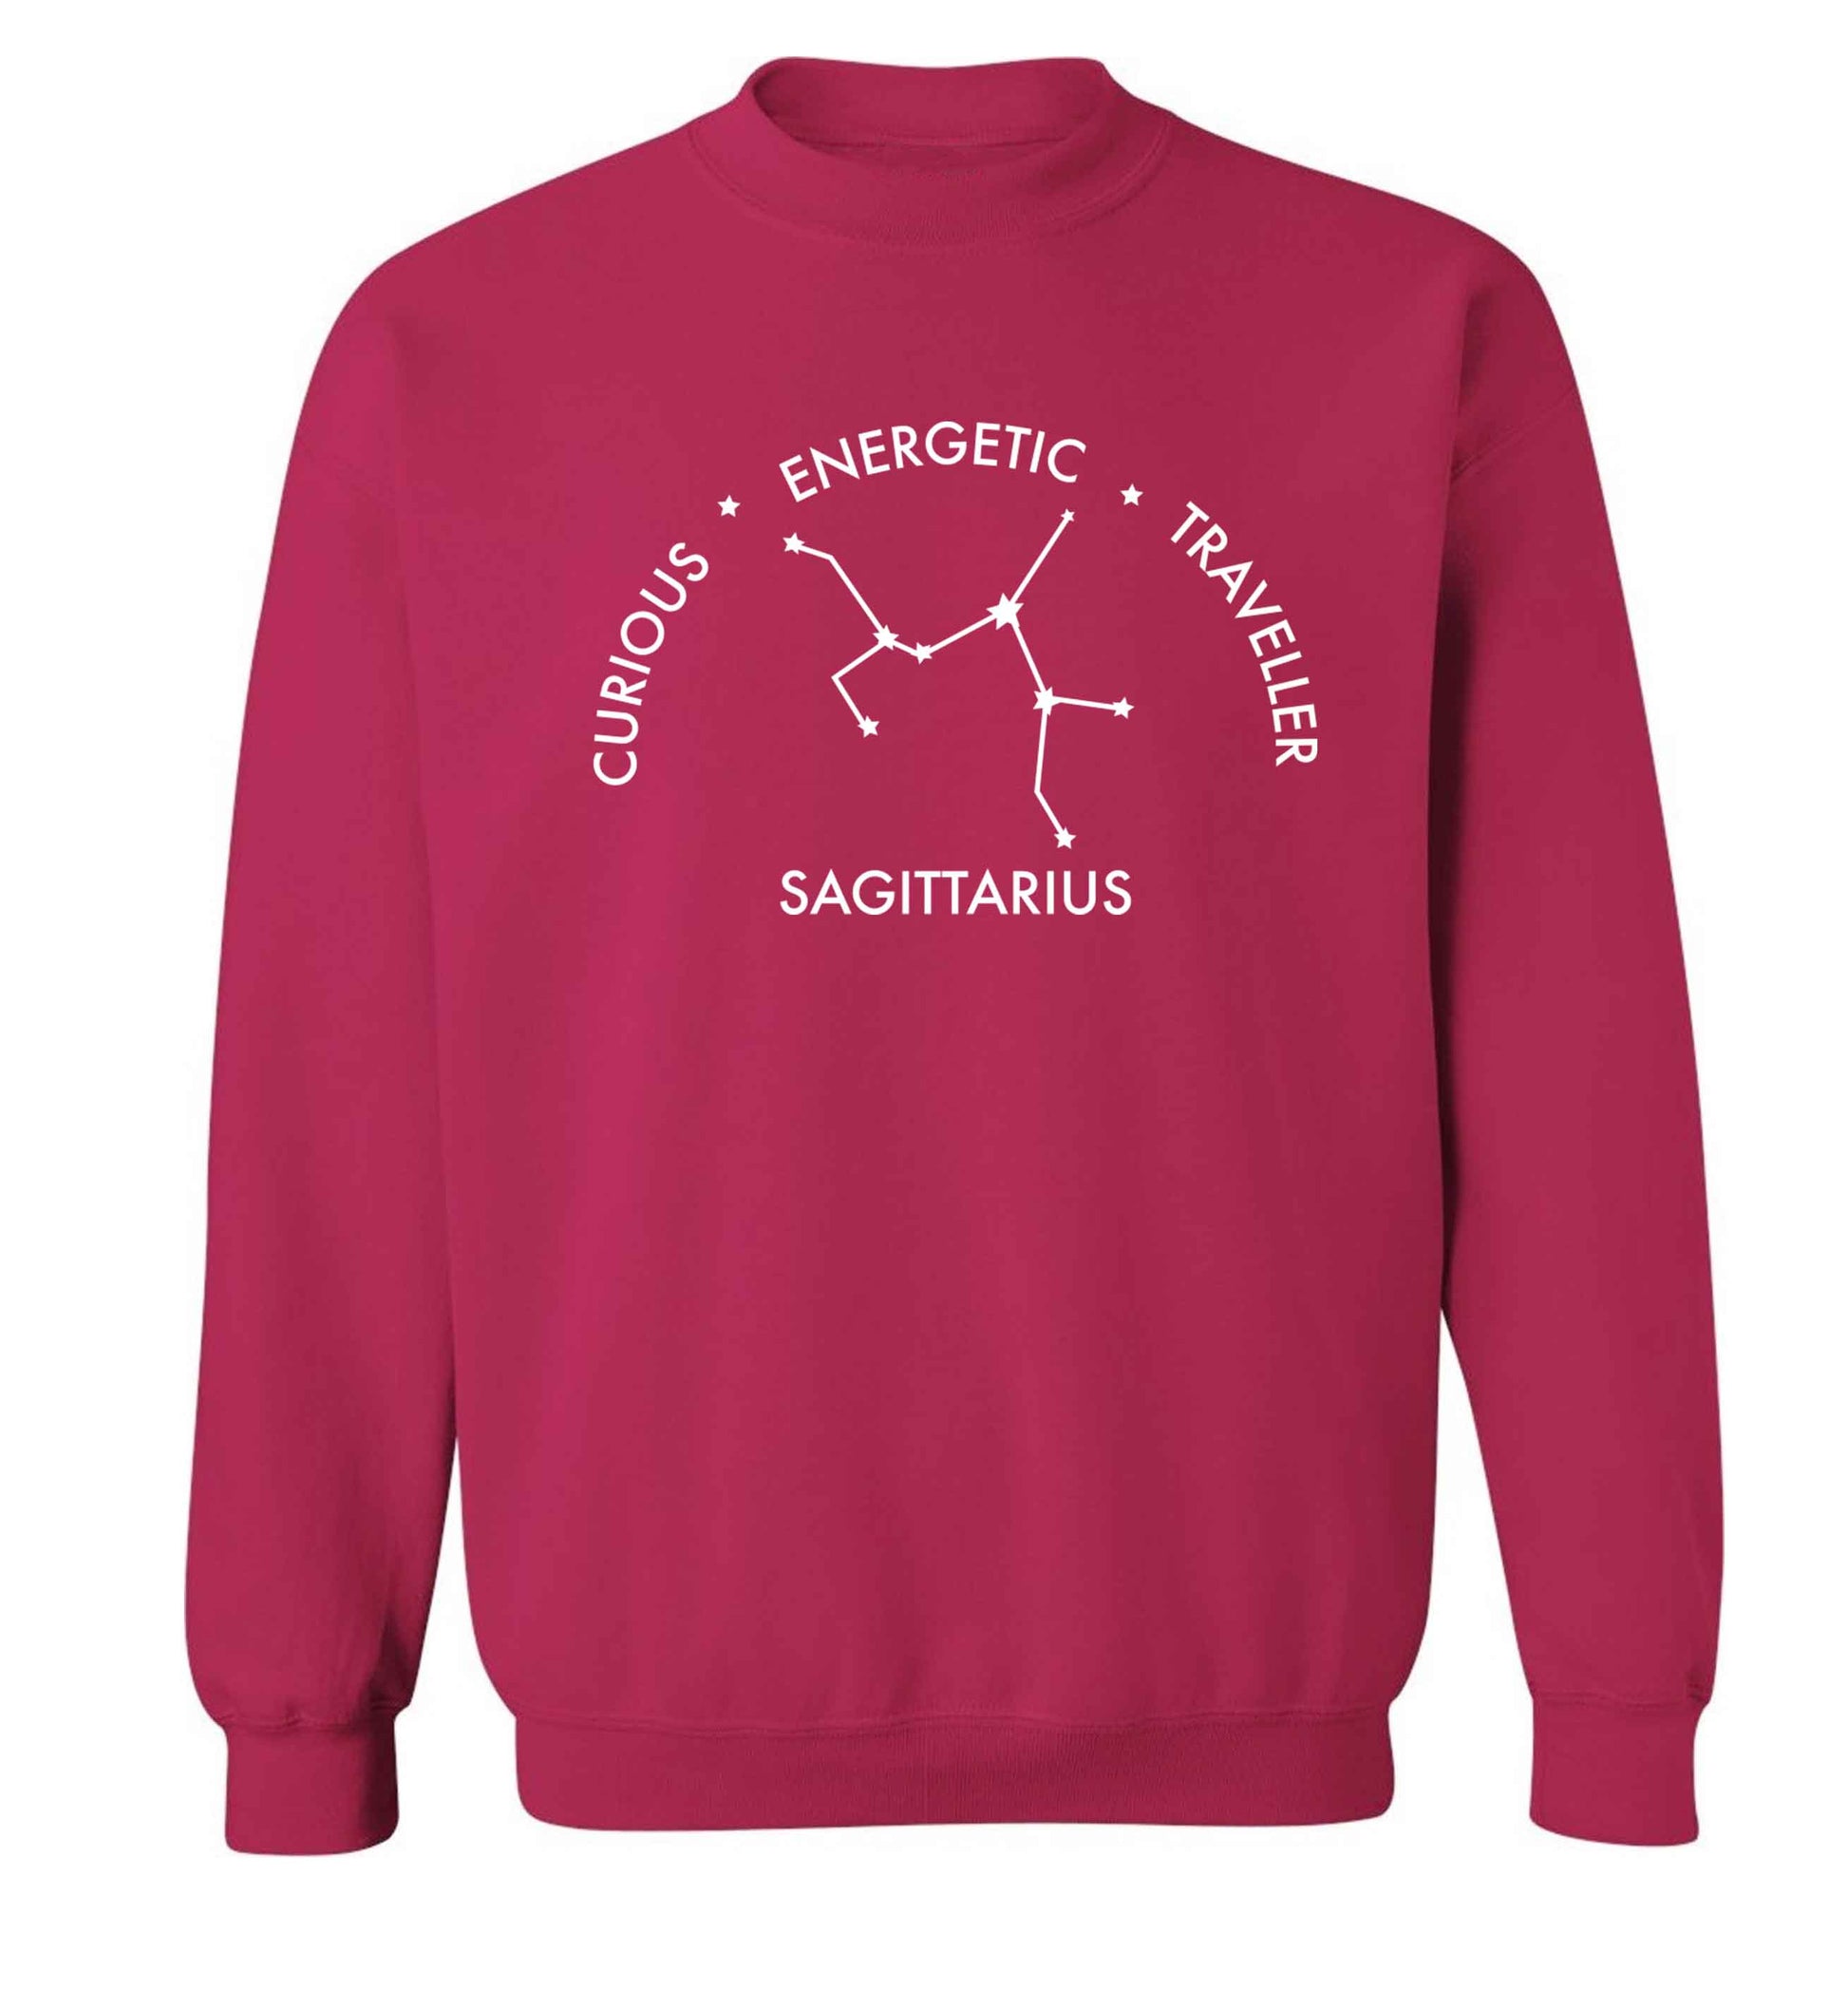 Sagittarius, curious, energetic, traveller Adult's unisex pink Sweater 2XL